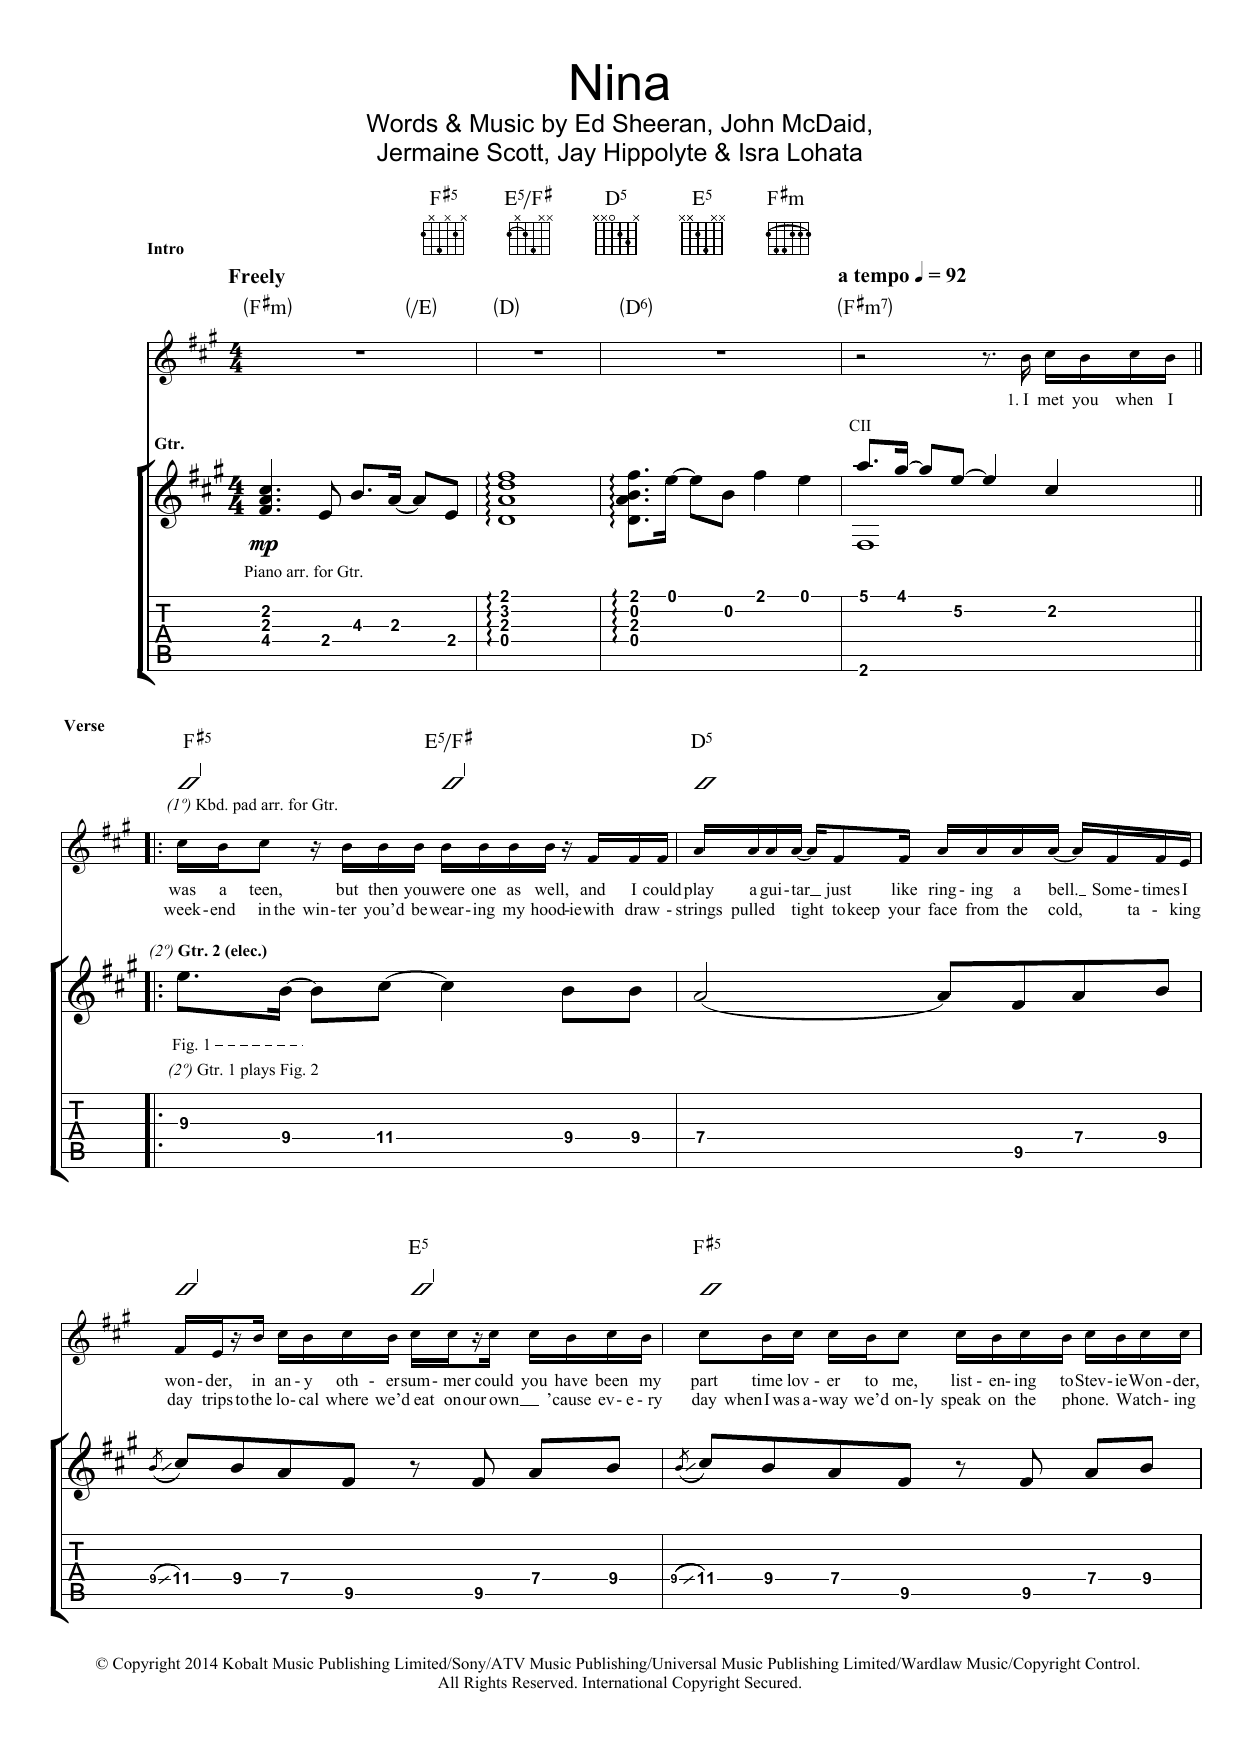 Download Ed Sheeran Nina Sheet Music and learn how to play Ukulele PDF digital score in minutes